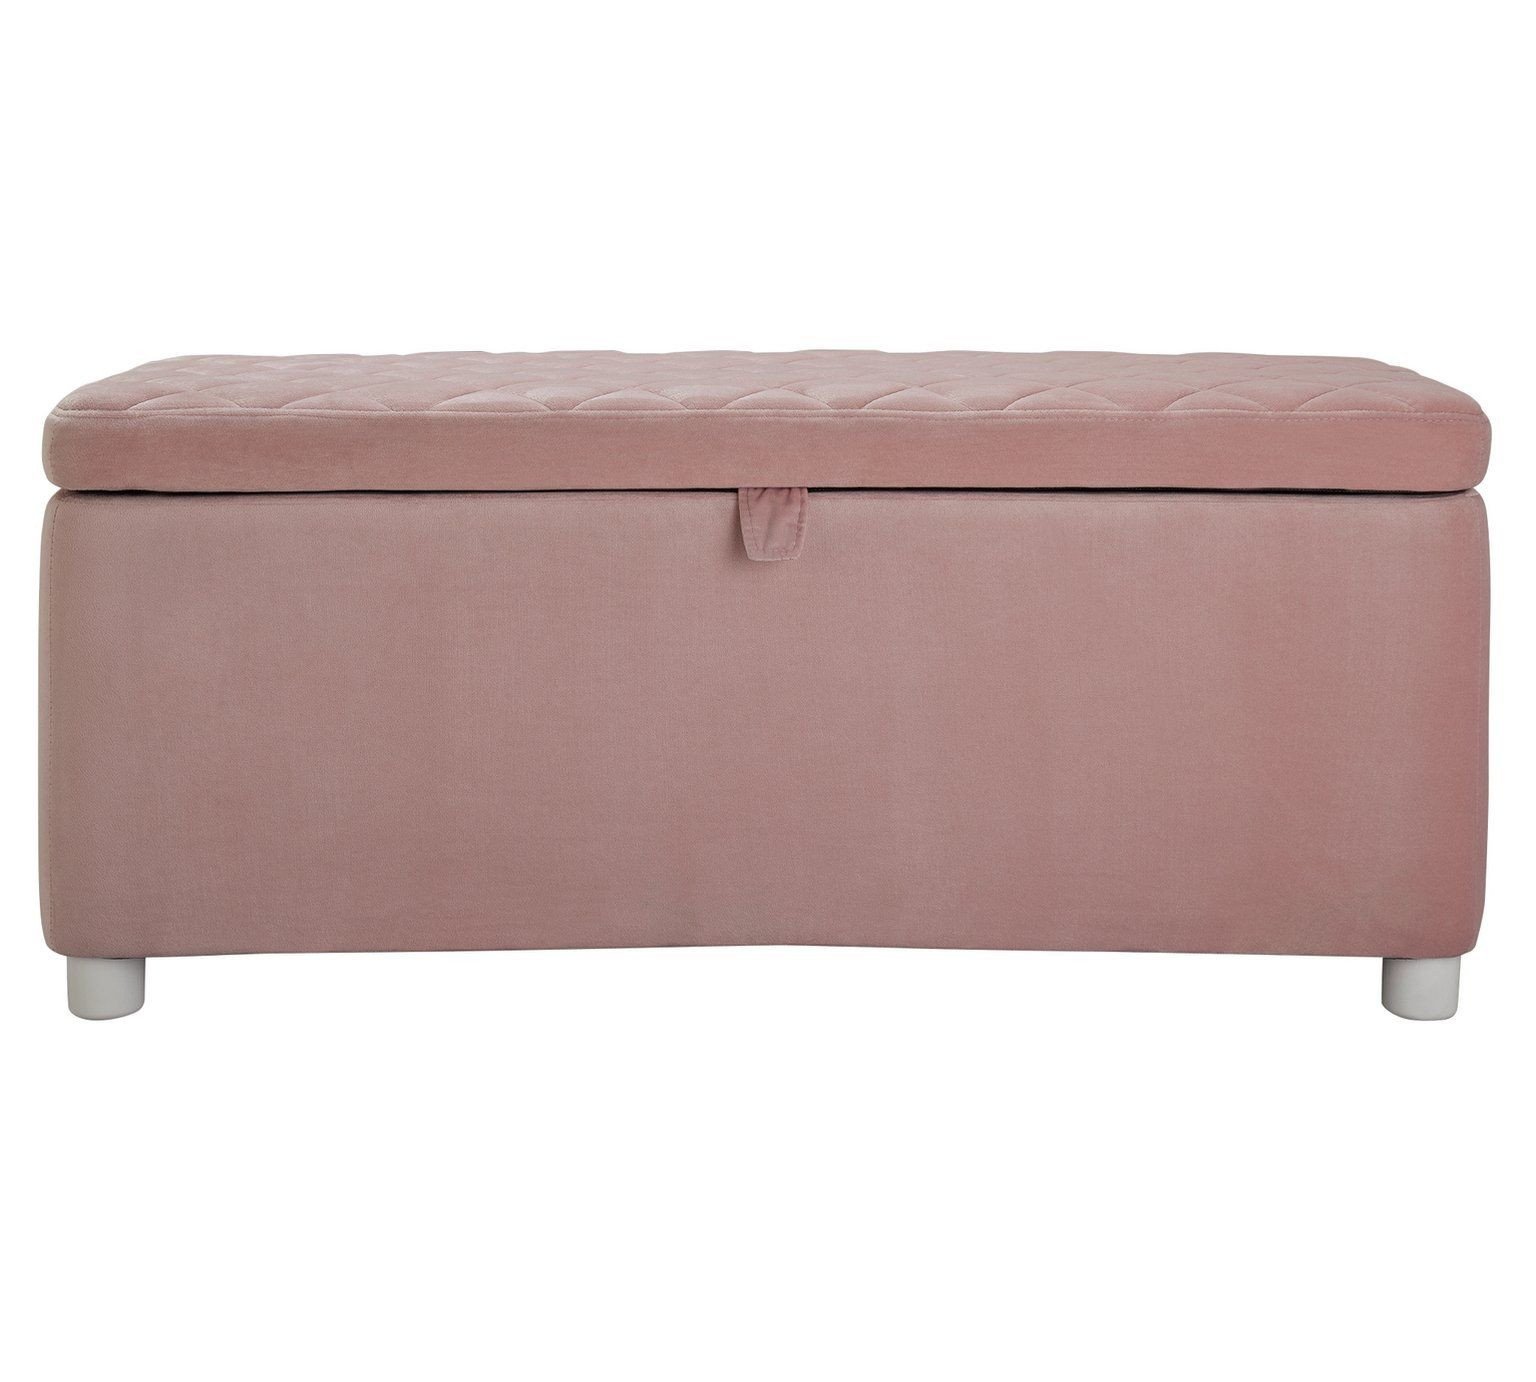 Small Storage Bench for Bedroom Best Of Buy Argos Home Velvet Ottoman Blush Pink